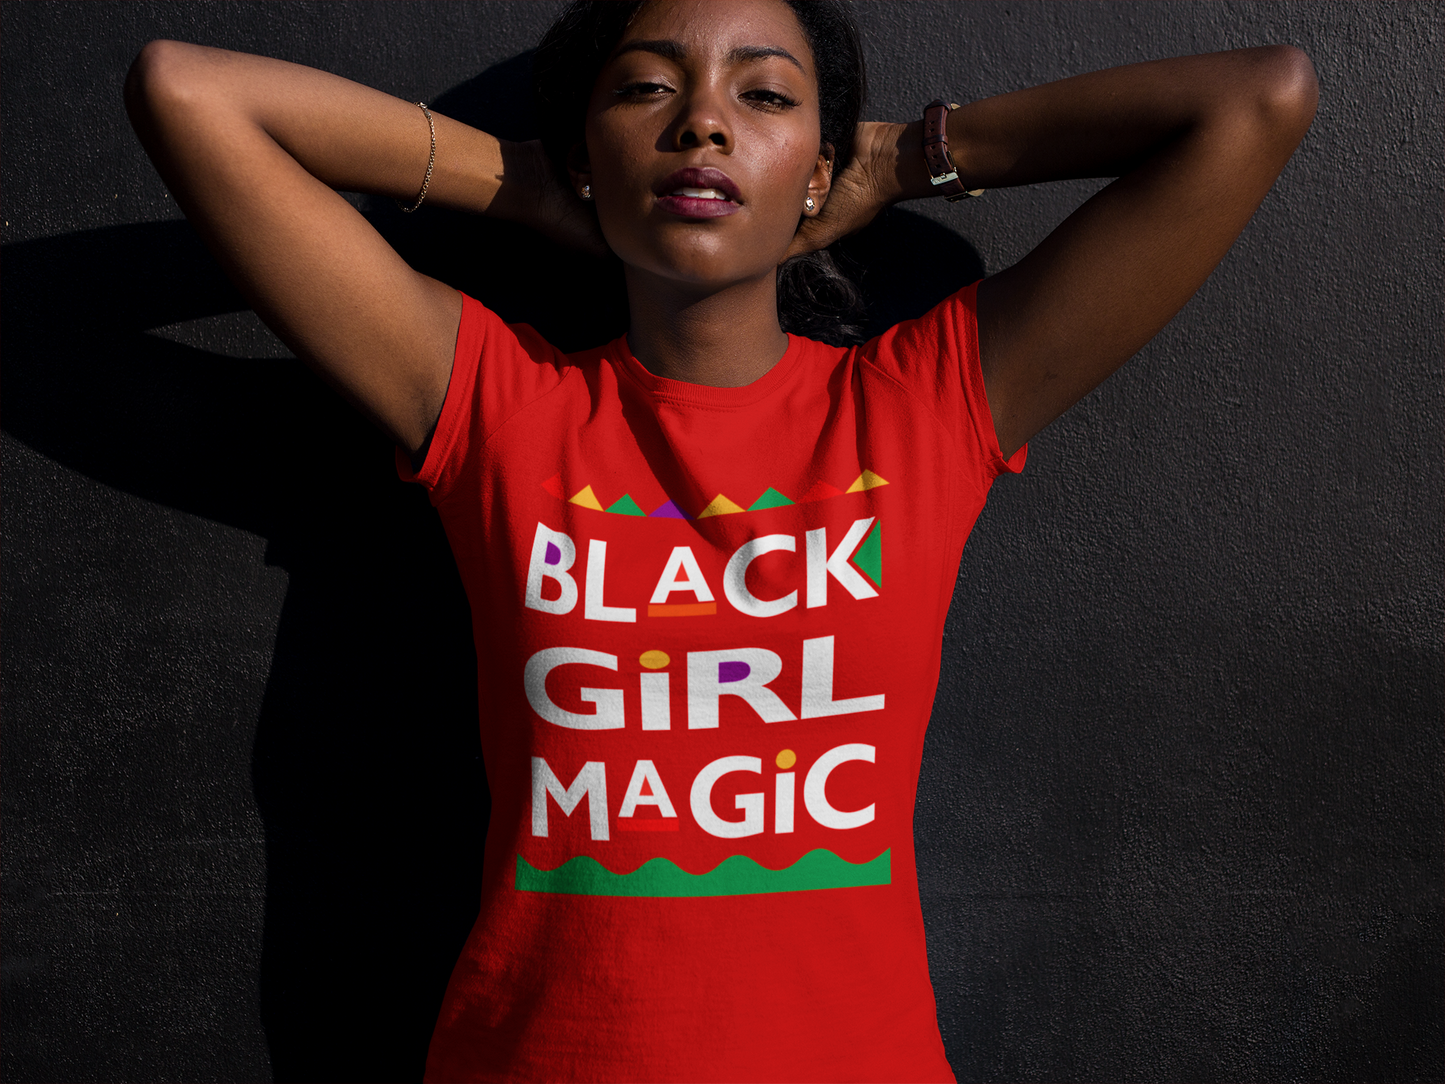 BLM - Black Girl Magic 90's Edition Shirt - Red